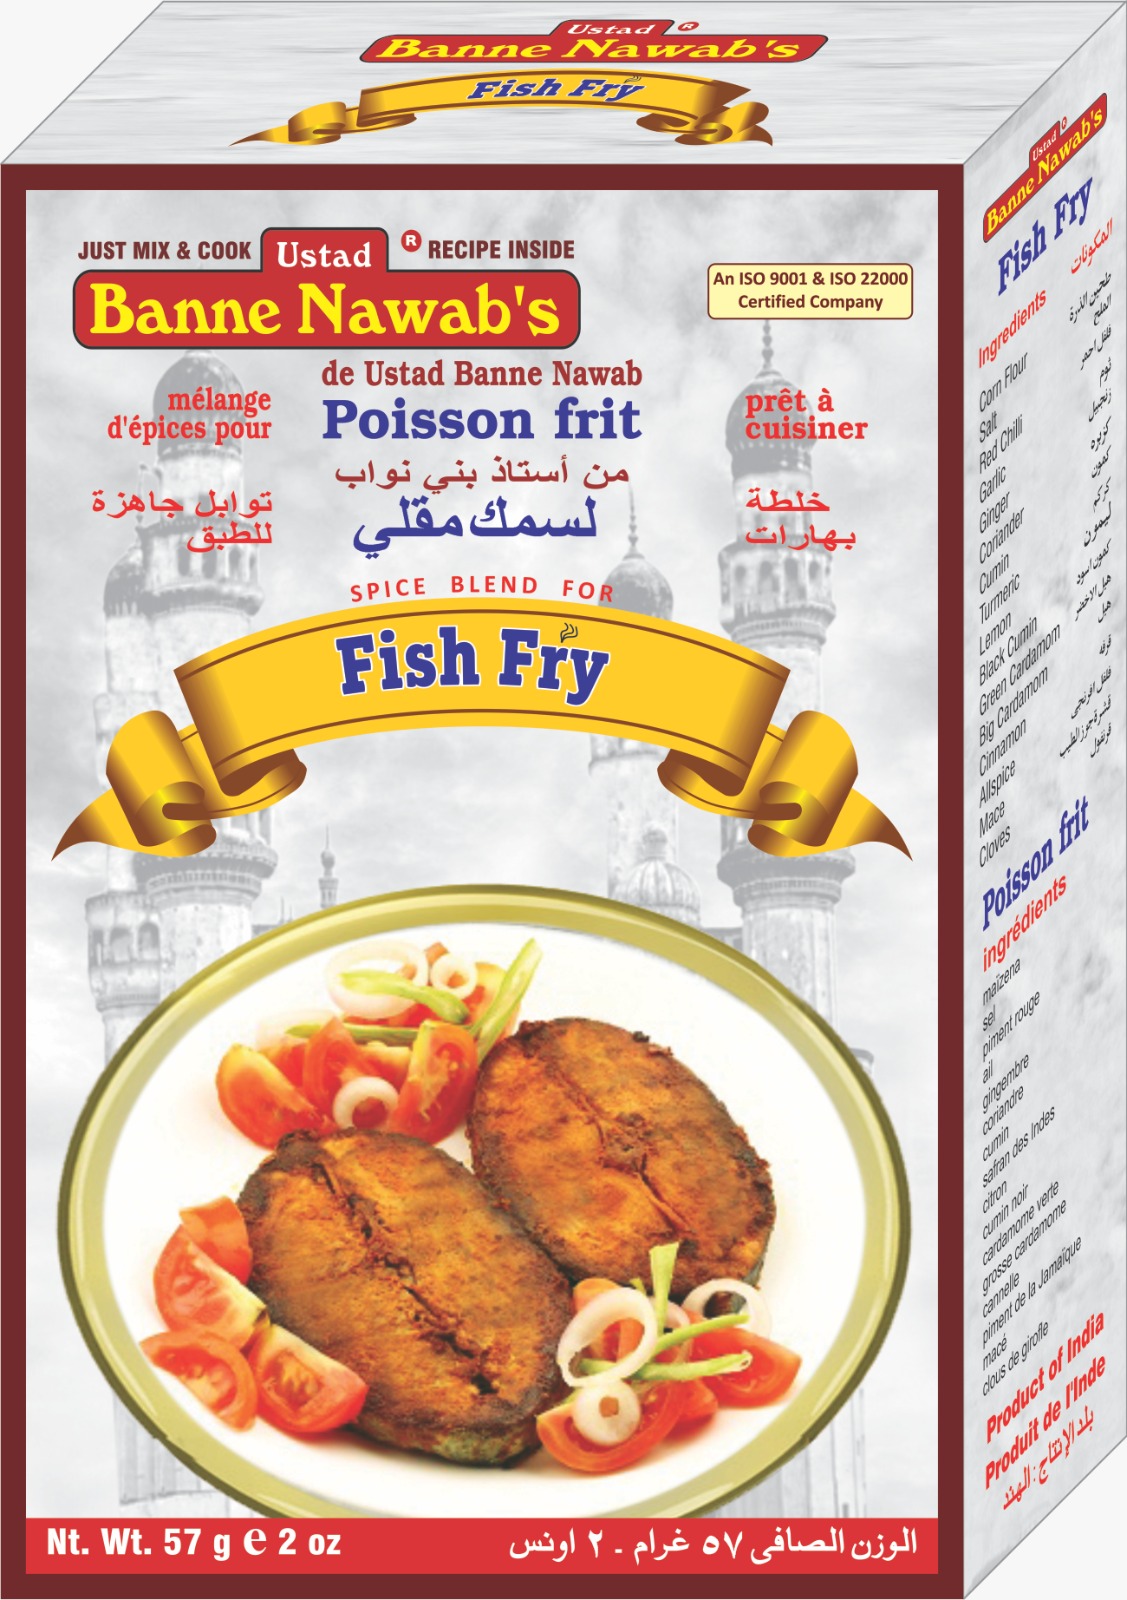 Ustad Banne Nawab's Fish Fry